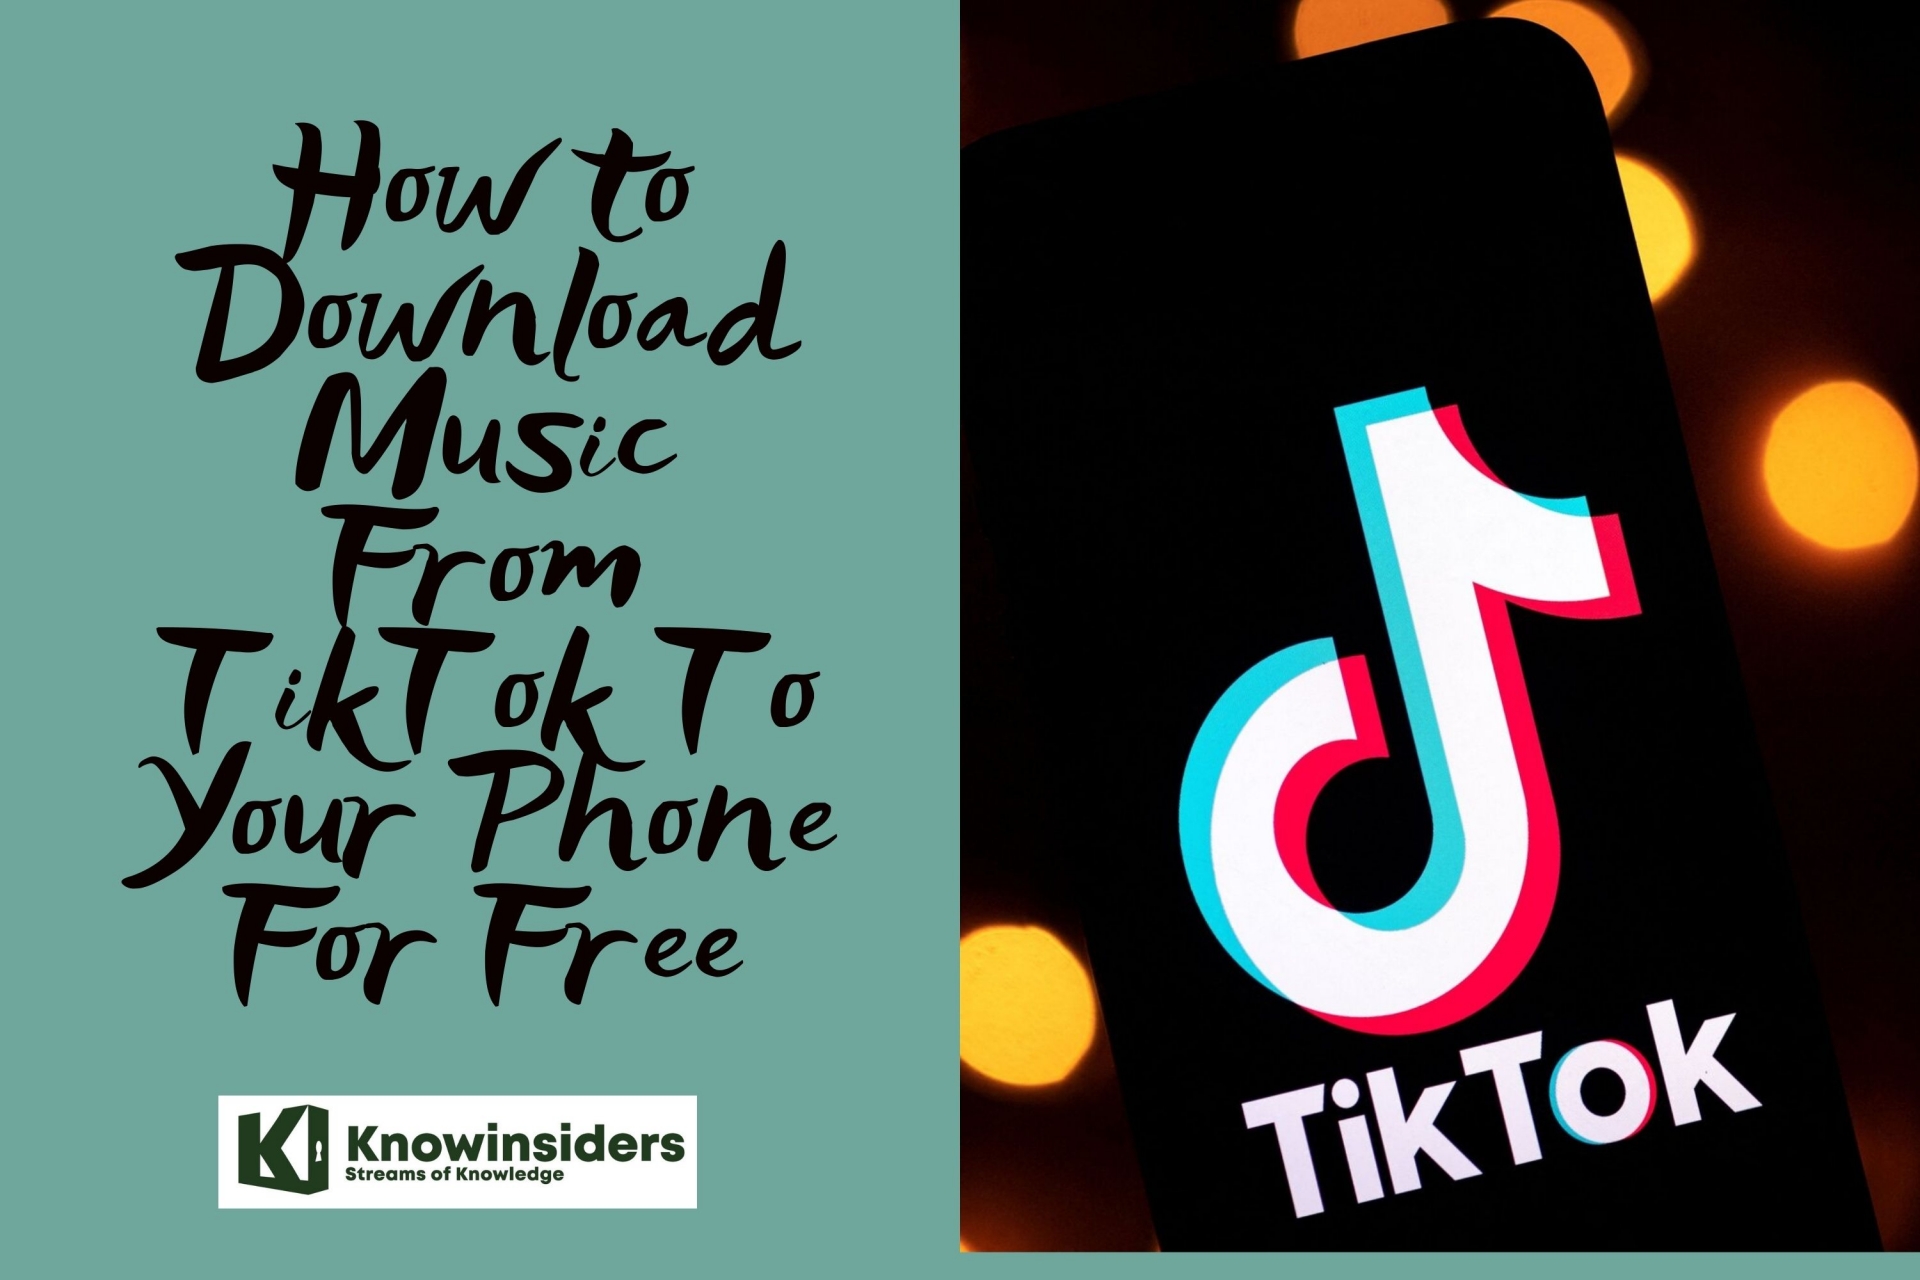 Download music from TikTok. Photo: KnowInsiders